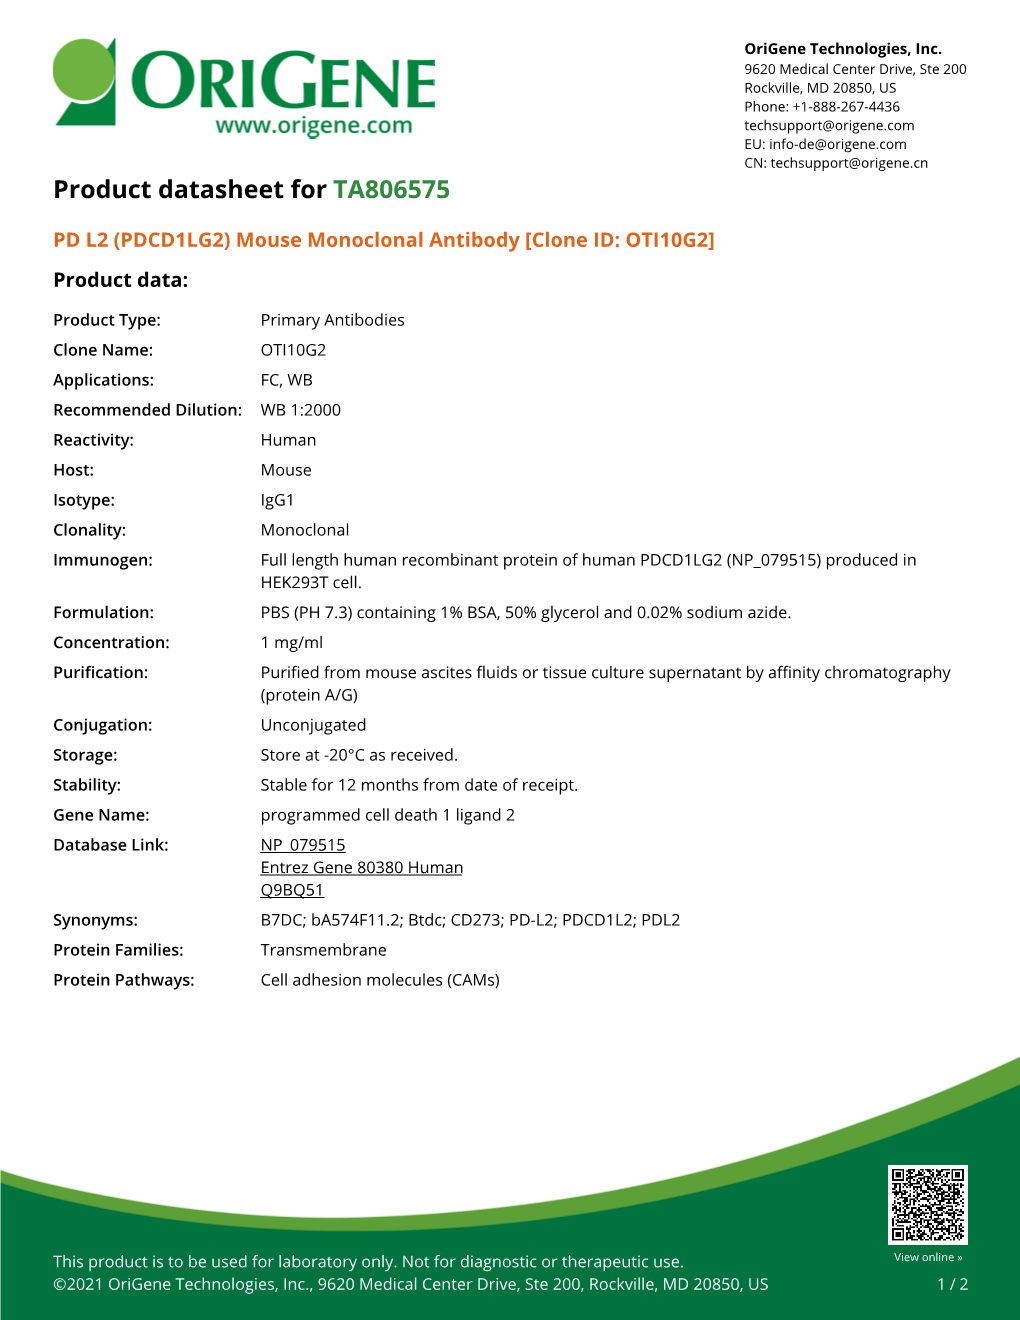 PD L2 (PDCD1LG2) Mouse Monoclonal Antibody [Clone ID: OTI10G2] Product Data